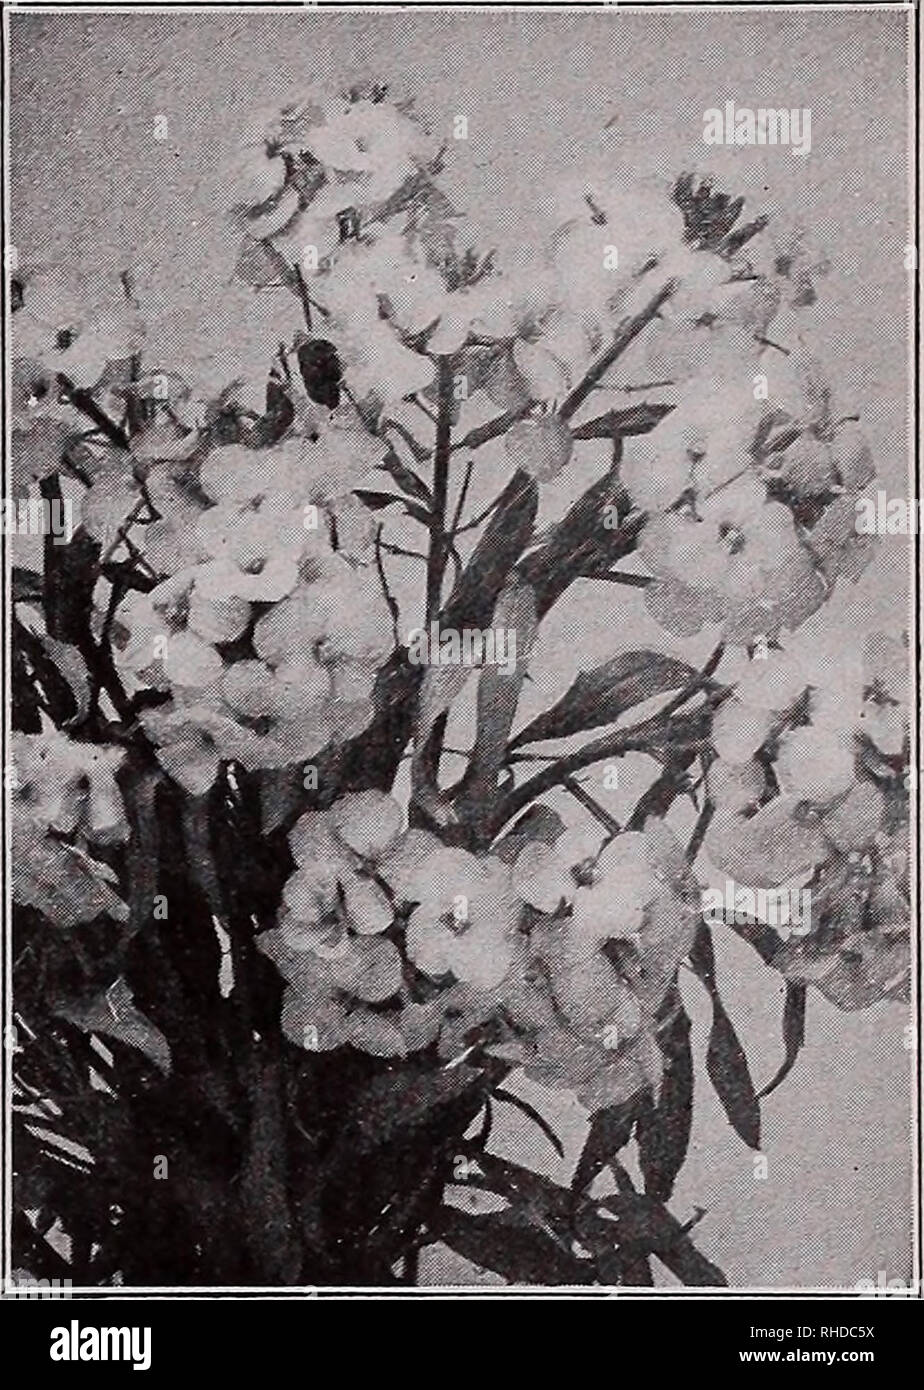 . Book for florists : spring 1935. Flowers Seeds Catalogs; Bulbs (Plants) Seedlings Catalogs; Vegetables Seeds Catalogs; Trees Seeds Catalogs; Horticulture Equipment and supplies Catalogs. CAMPANULA Medium (Canterbury Bells) BOCCONIA (Plume Poppy) 7rade pkt. Oz. CHEIRANTHUS (Siberian Wallflower) Bignonia Radicans (Trumpet Vine) $0.15 BocconiaJaponica (PlumePoppy). 5 ft lb., $4.00 .10 Boltonia Asteroides. White daisy flowers, 4-6 ft 35 Latisquama. Delicate pink, 4-5 ft M oz., 60c .25 Nana. Dwarf, 3 ft Moz., 70c .35 Buddleia Veitchiana. Butterfly Bush. 5 ft 25 Buphthalmum Cordifolium (Speciosum) Stock Photo